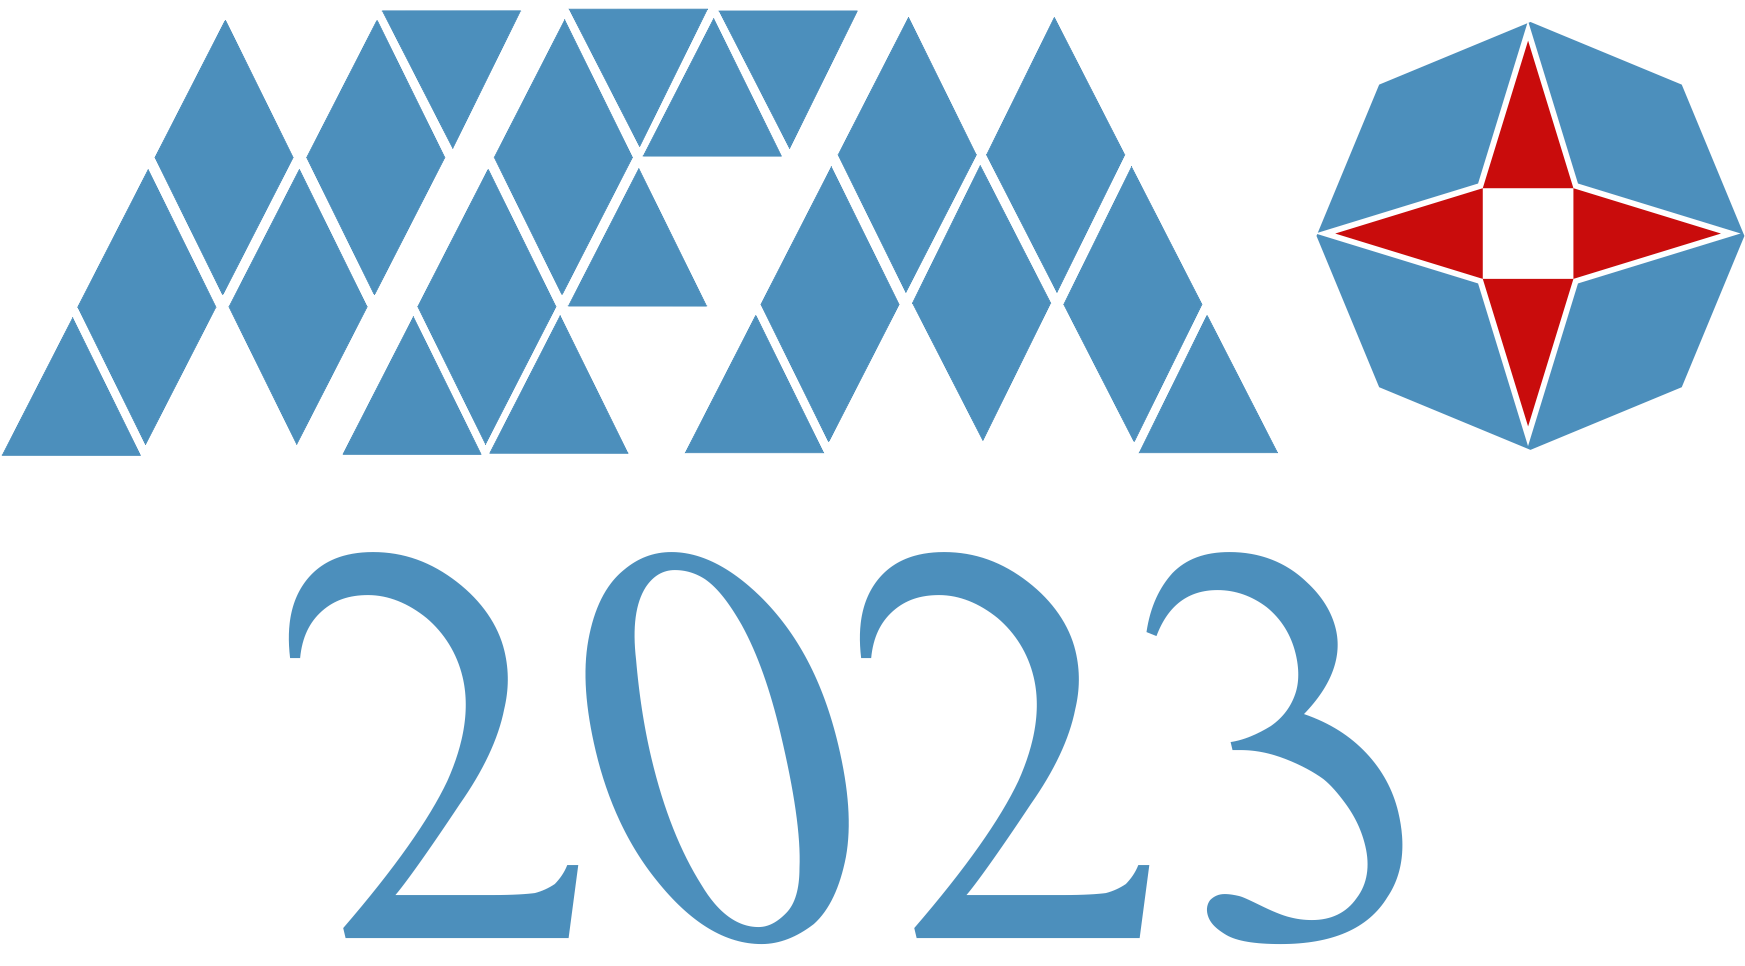 Hosting NEMO'2023 IEEE MTTS International Conference on